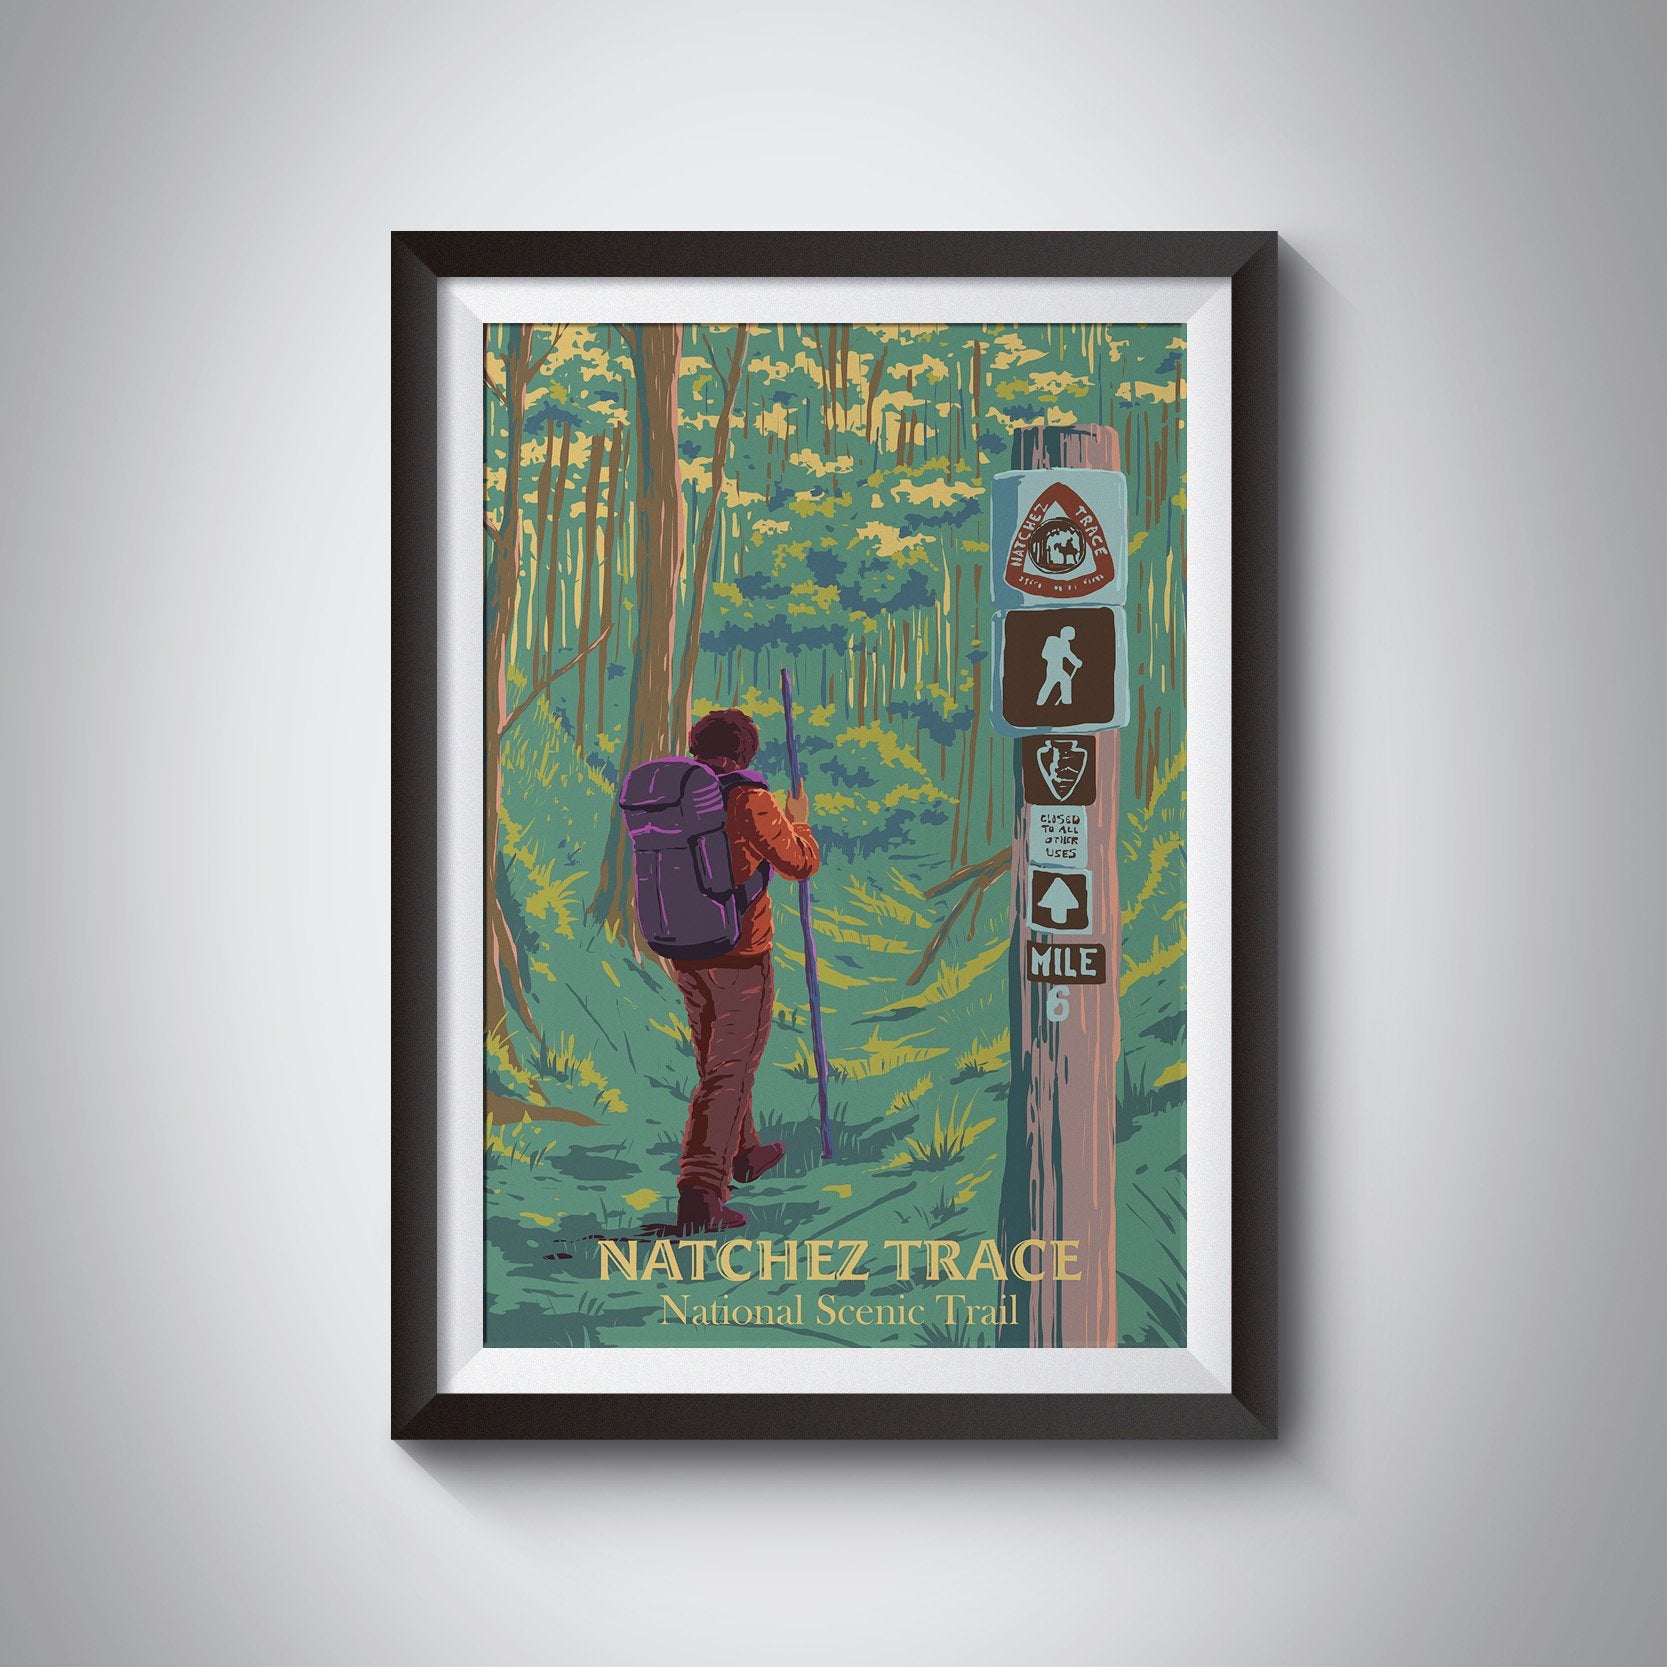 Natchez Trace National Scenic Trail Travel Poster